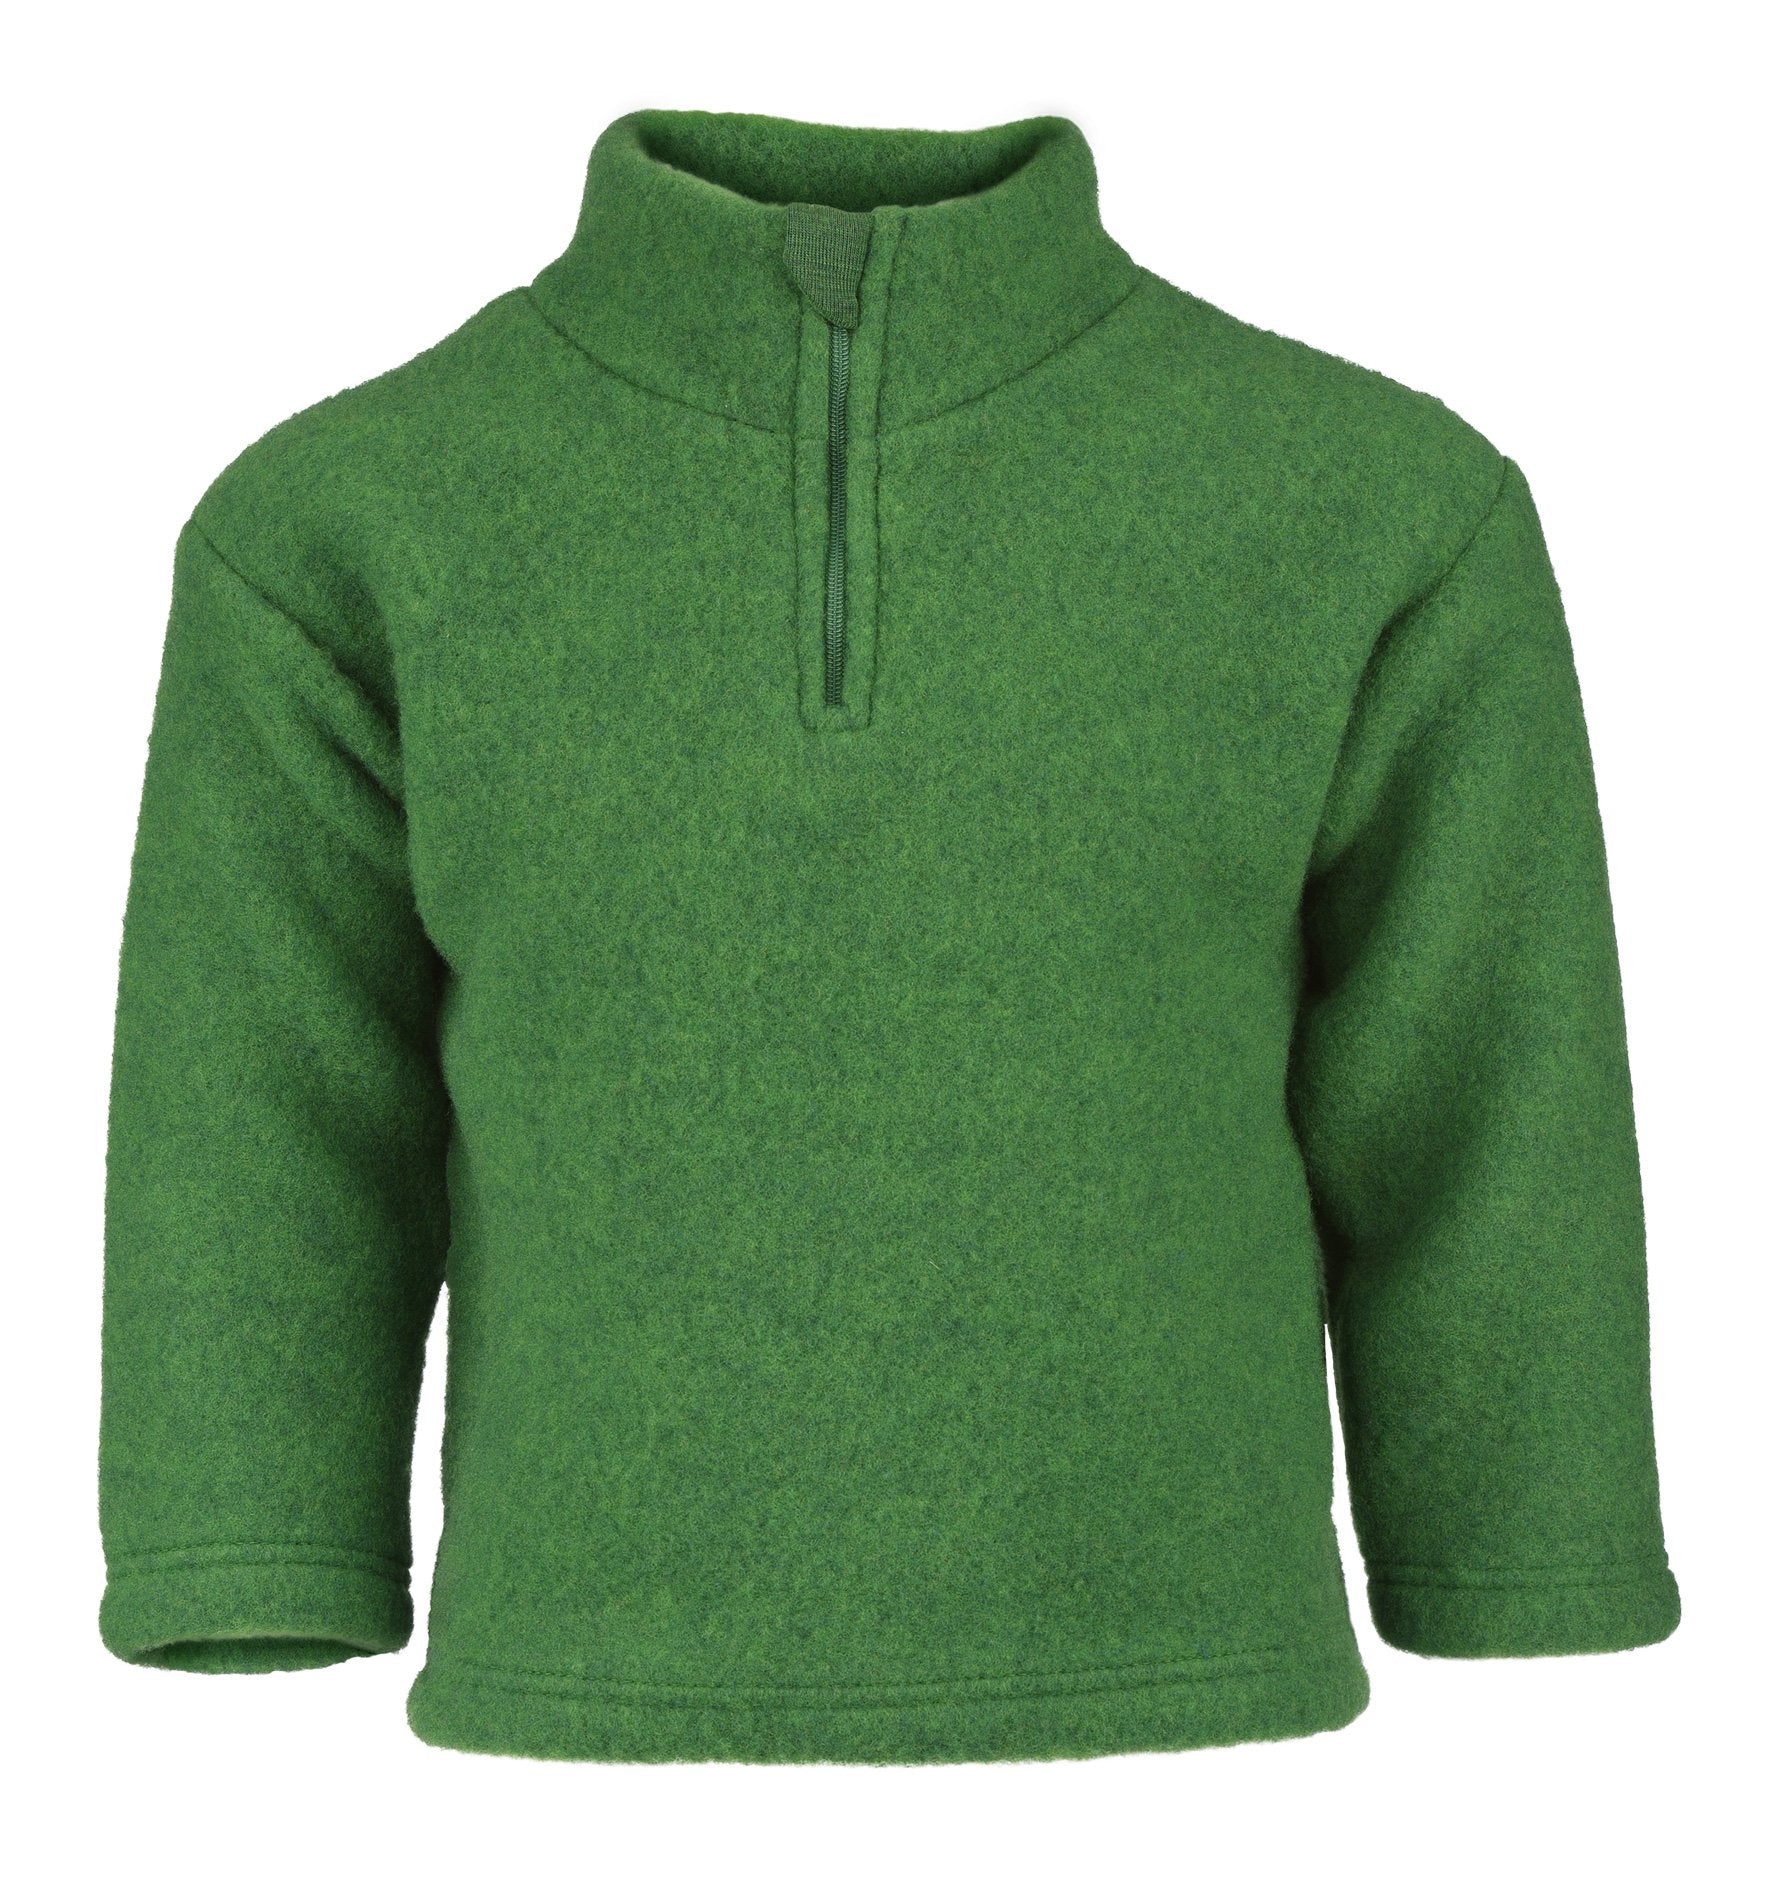 Pulover copii Engel din lana merinos fleece cu fermoar verde